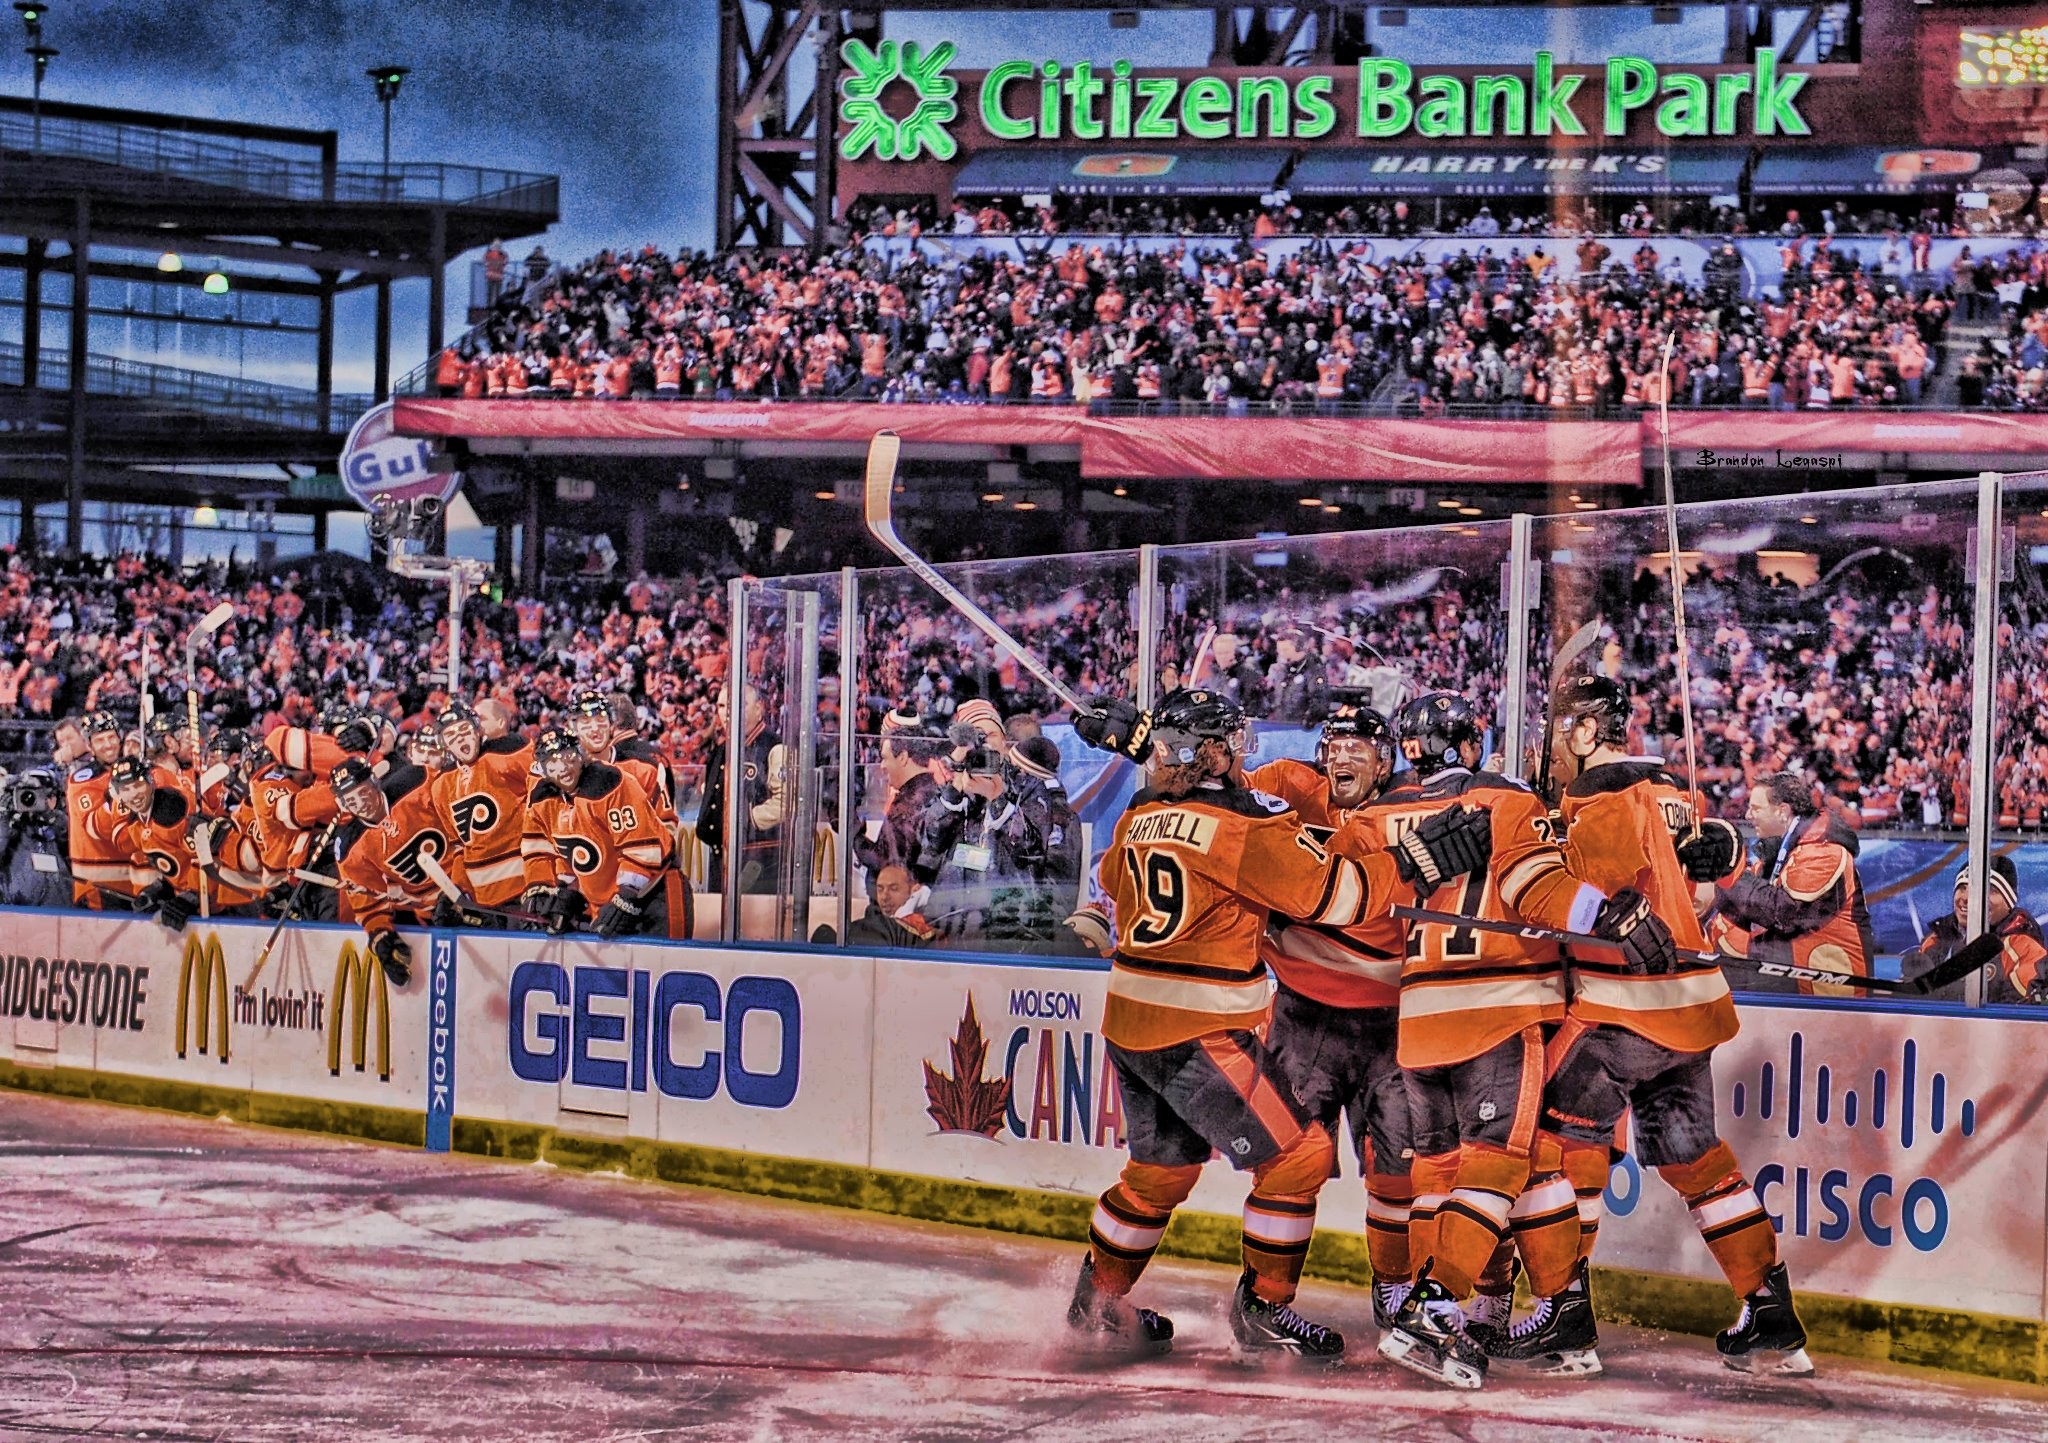 2048x1443 Philadelphia Flyers - Winter Classic at Citizens Bank Park